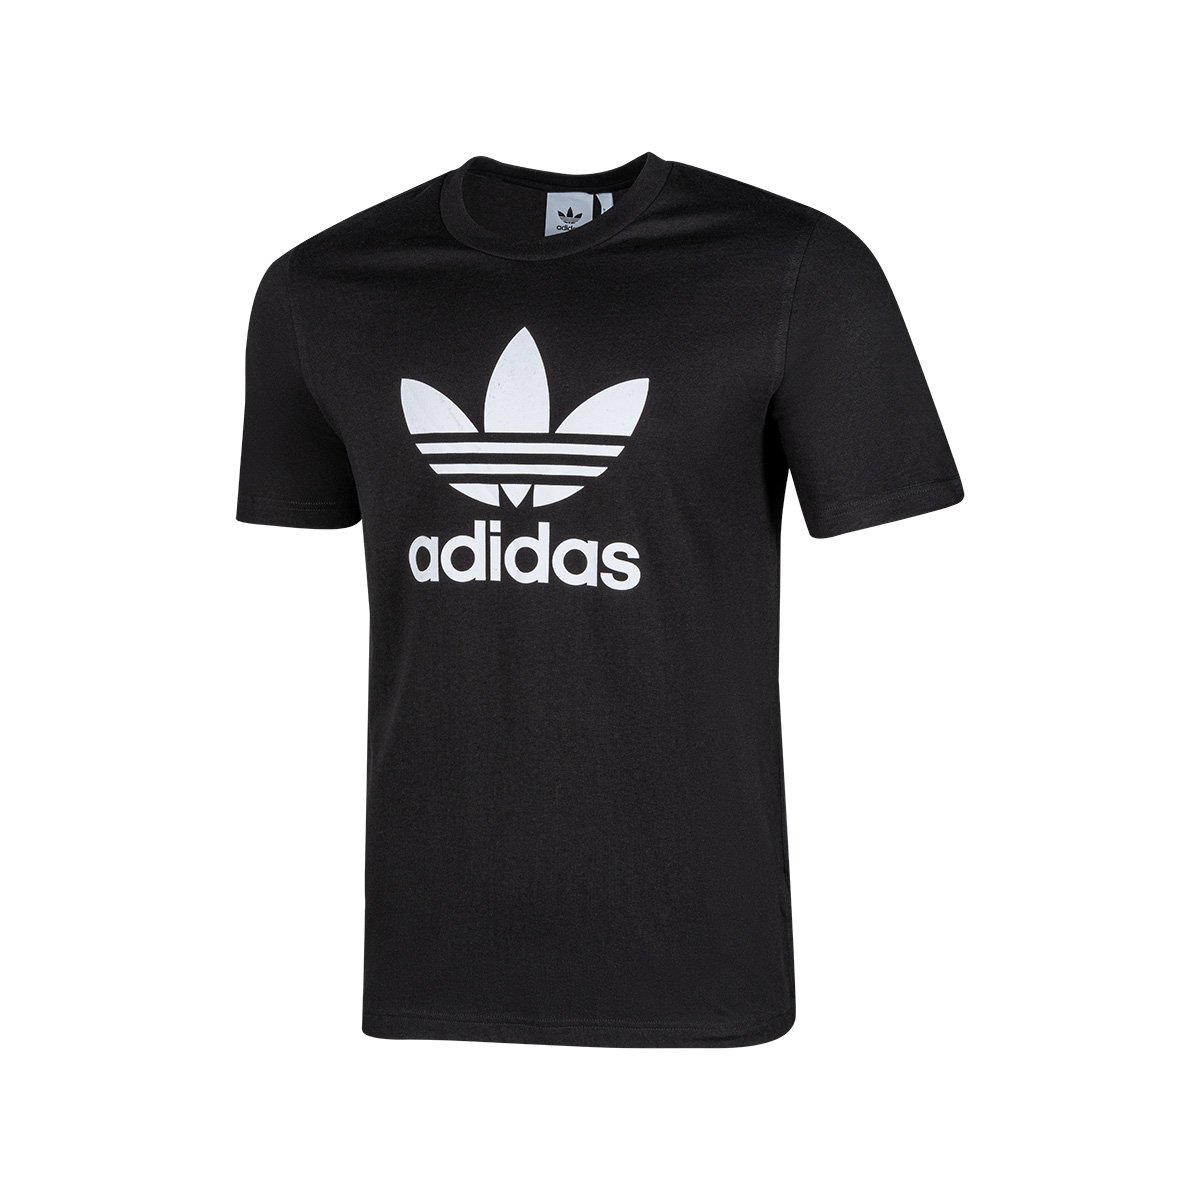 Buy Adidas Trefoil - Men's T-Shirt online | Foot Locker Kuwait